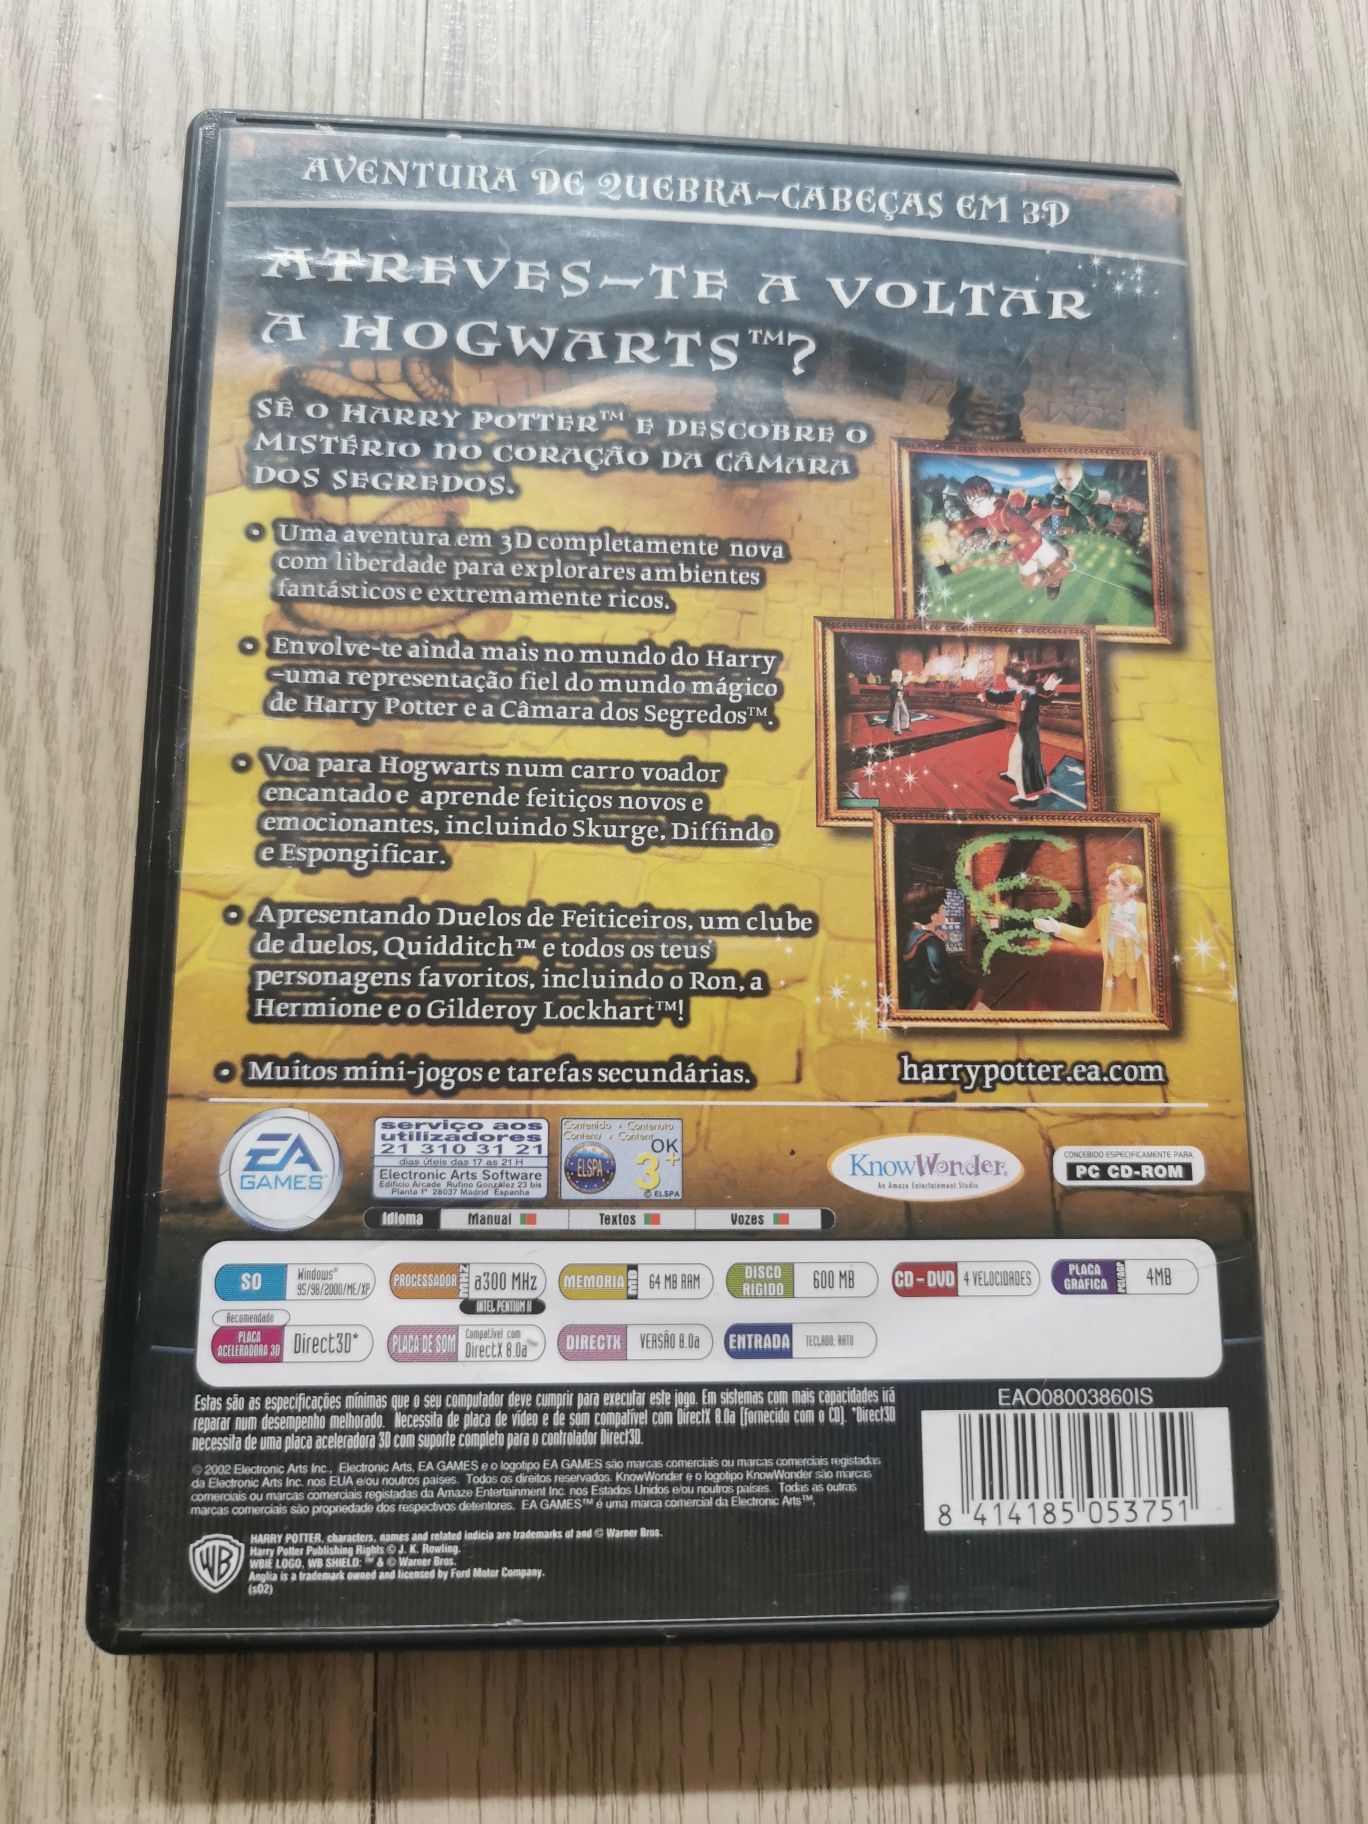 Harry Potter - Jogo PC-CD ROM